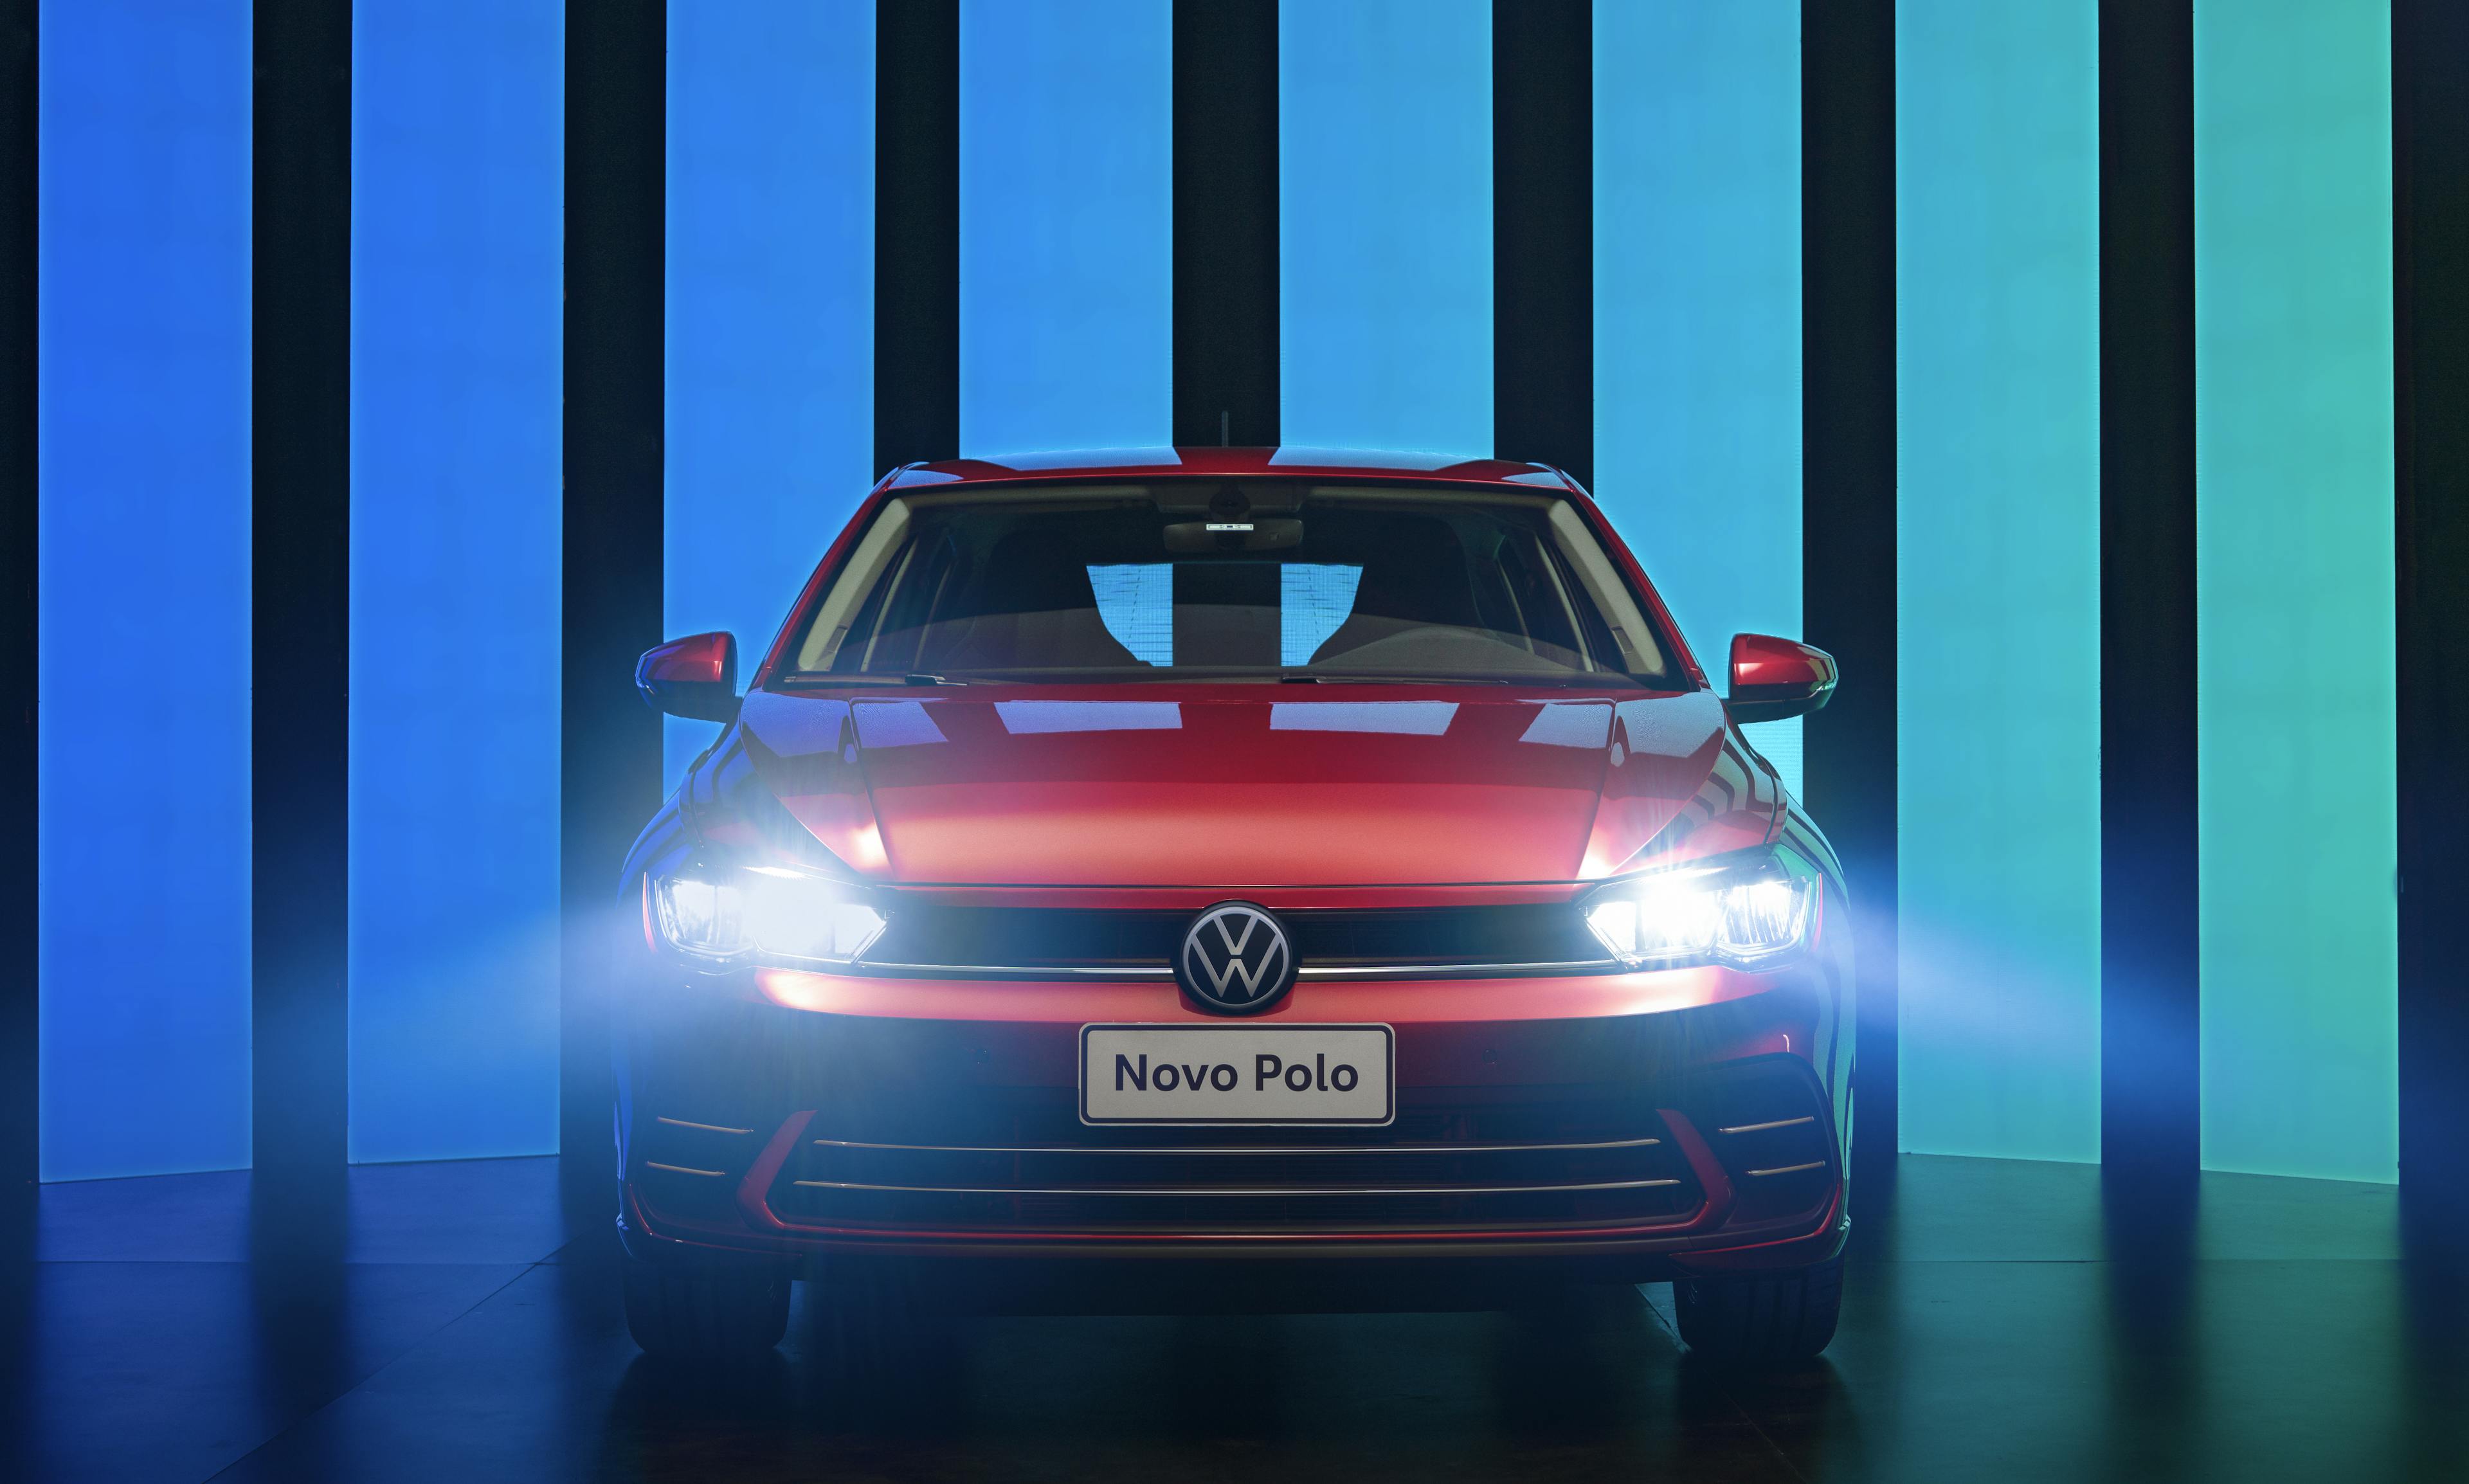 Compre o seu novo Volkswagen com o consórcio!